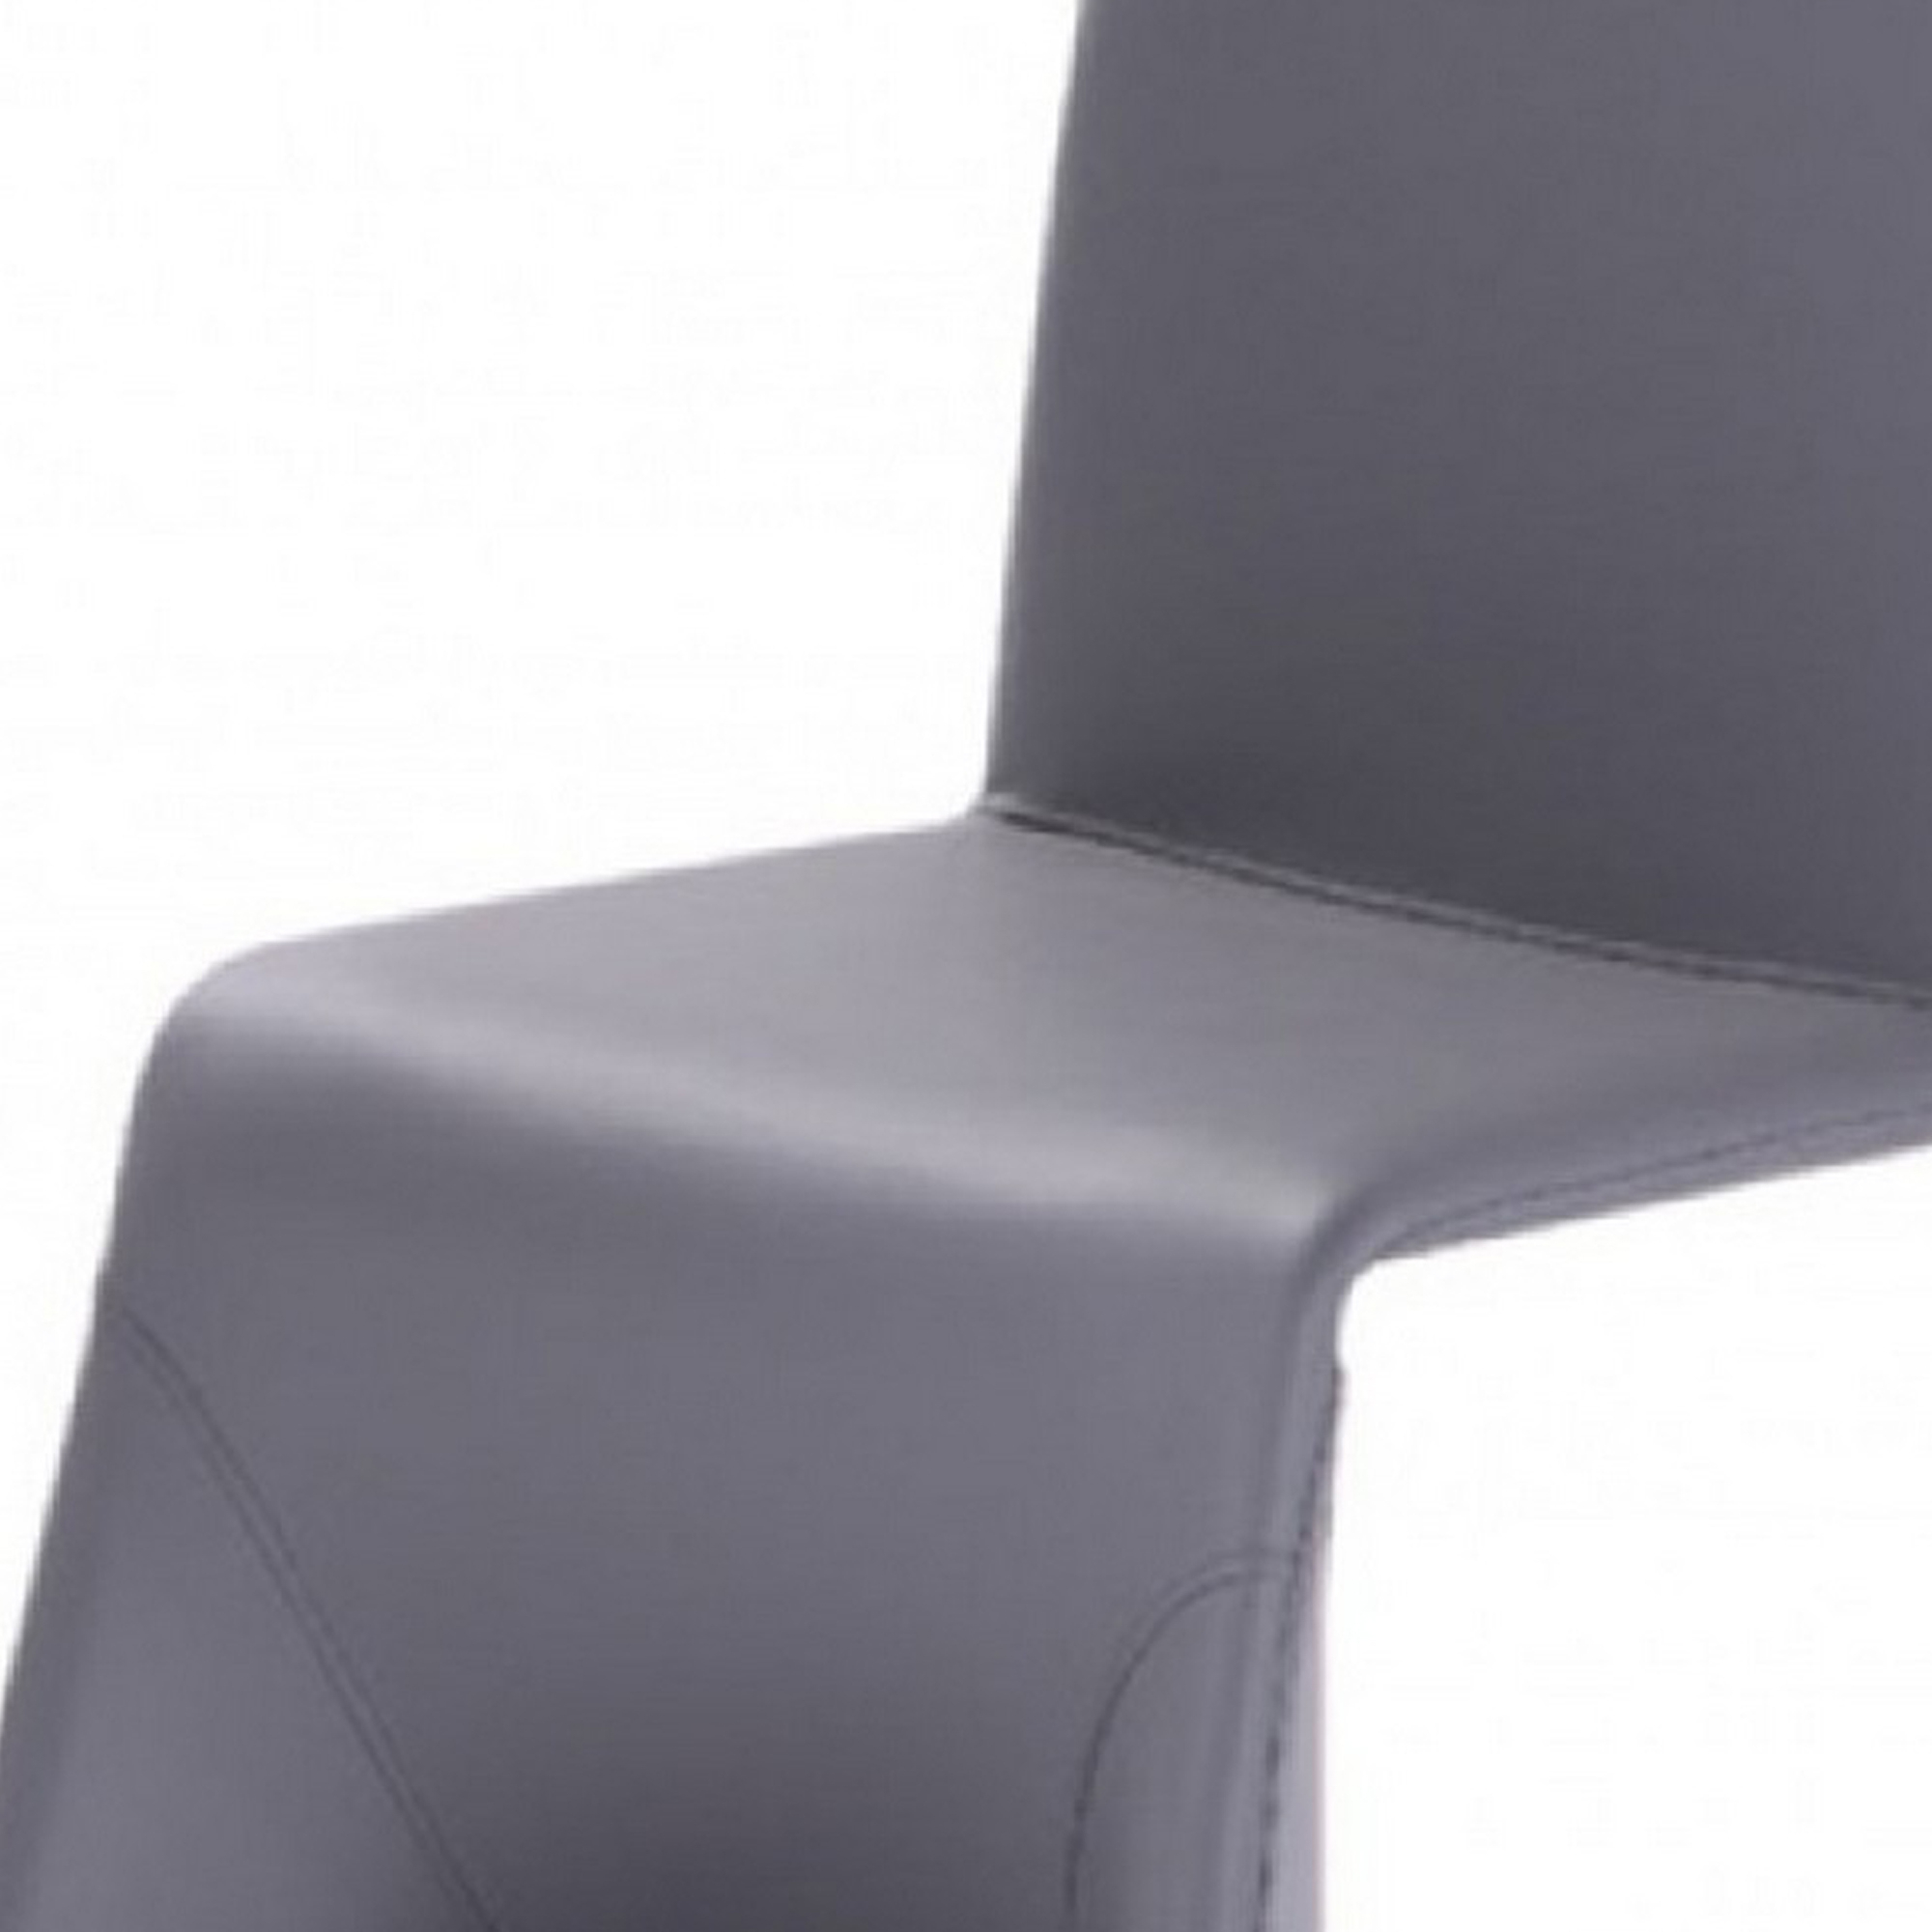 Fully Leatherette Upholstered Metal Frame Dining Chair, Set Of 2, Gray- Saltoro Sherpi